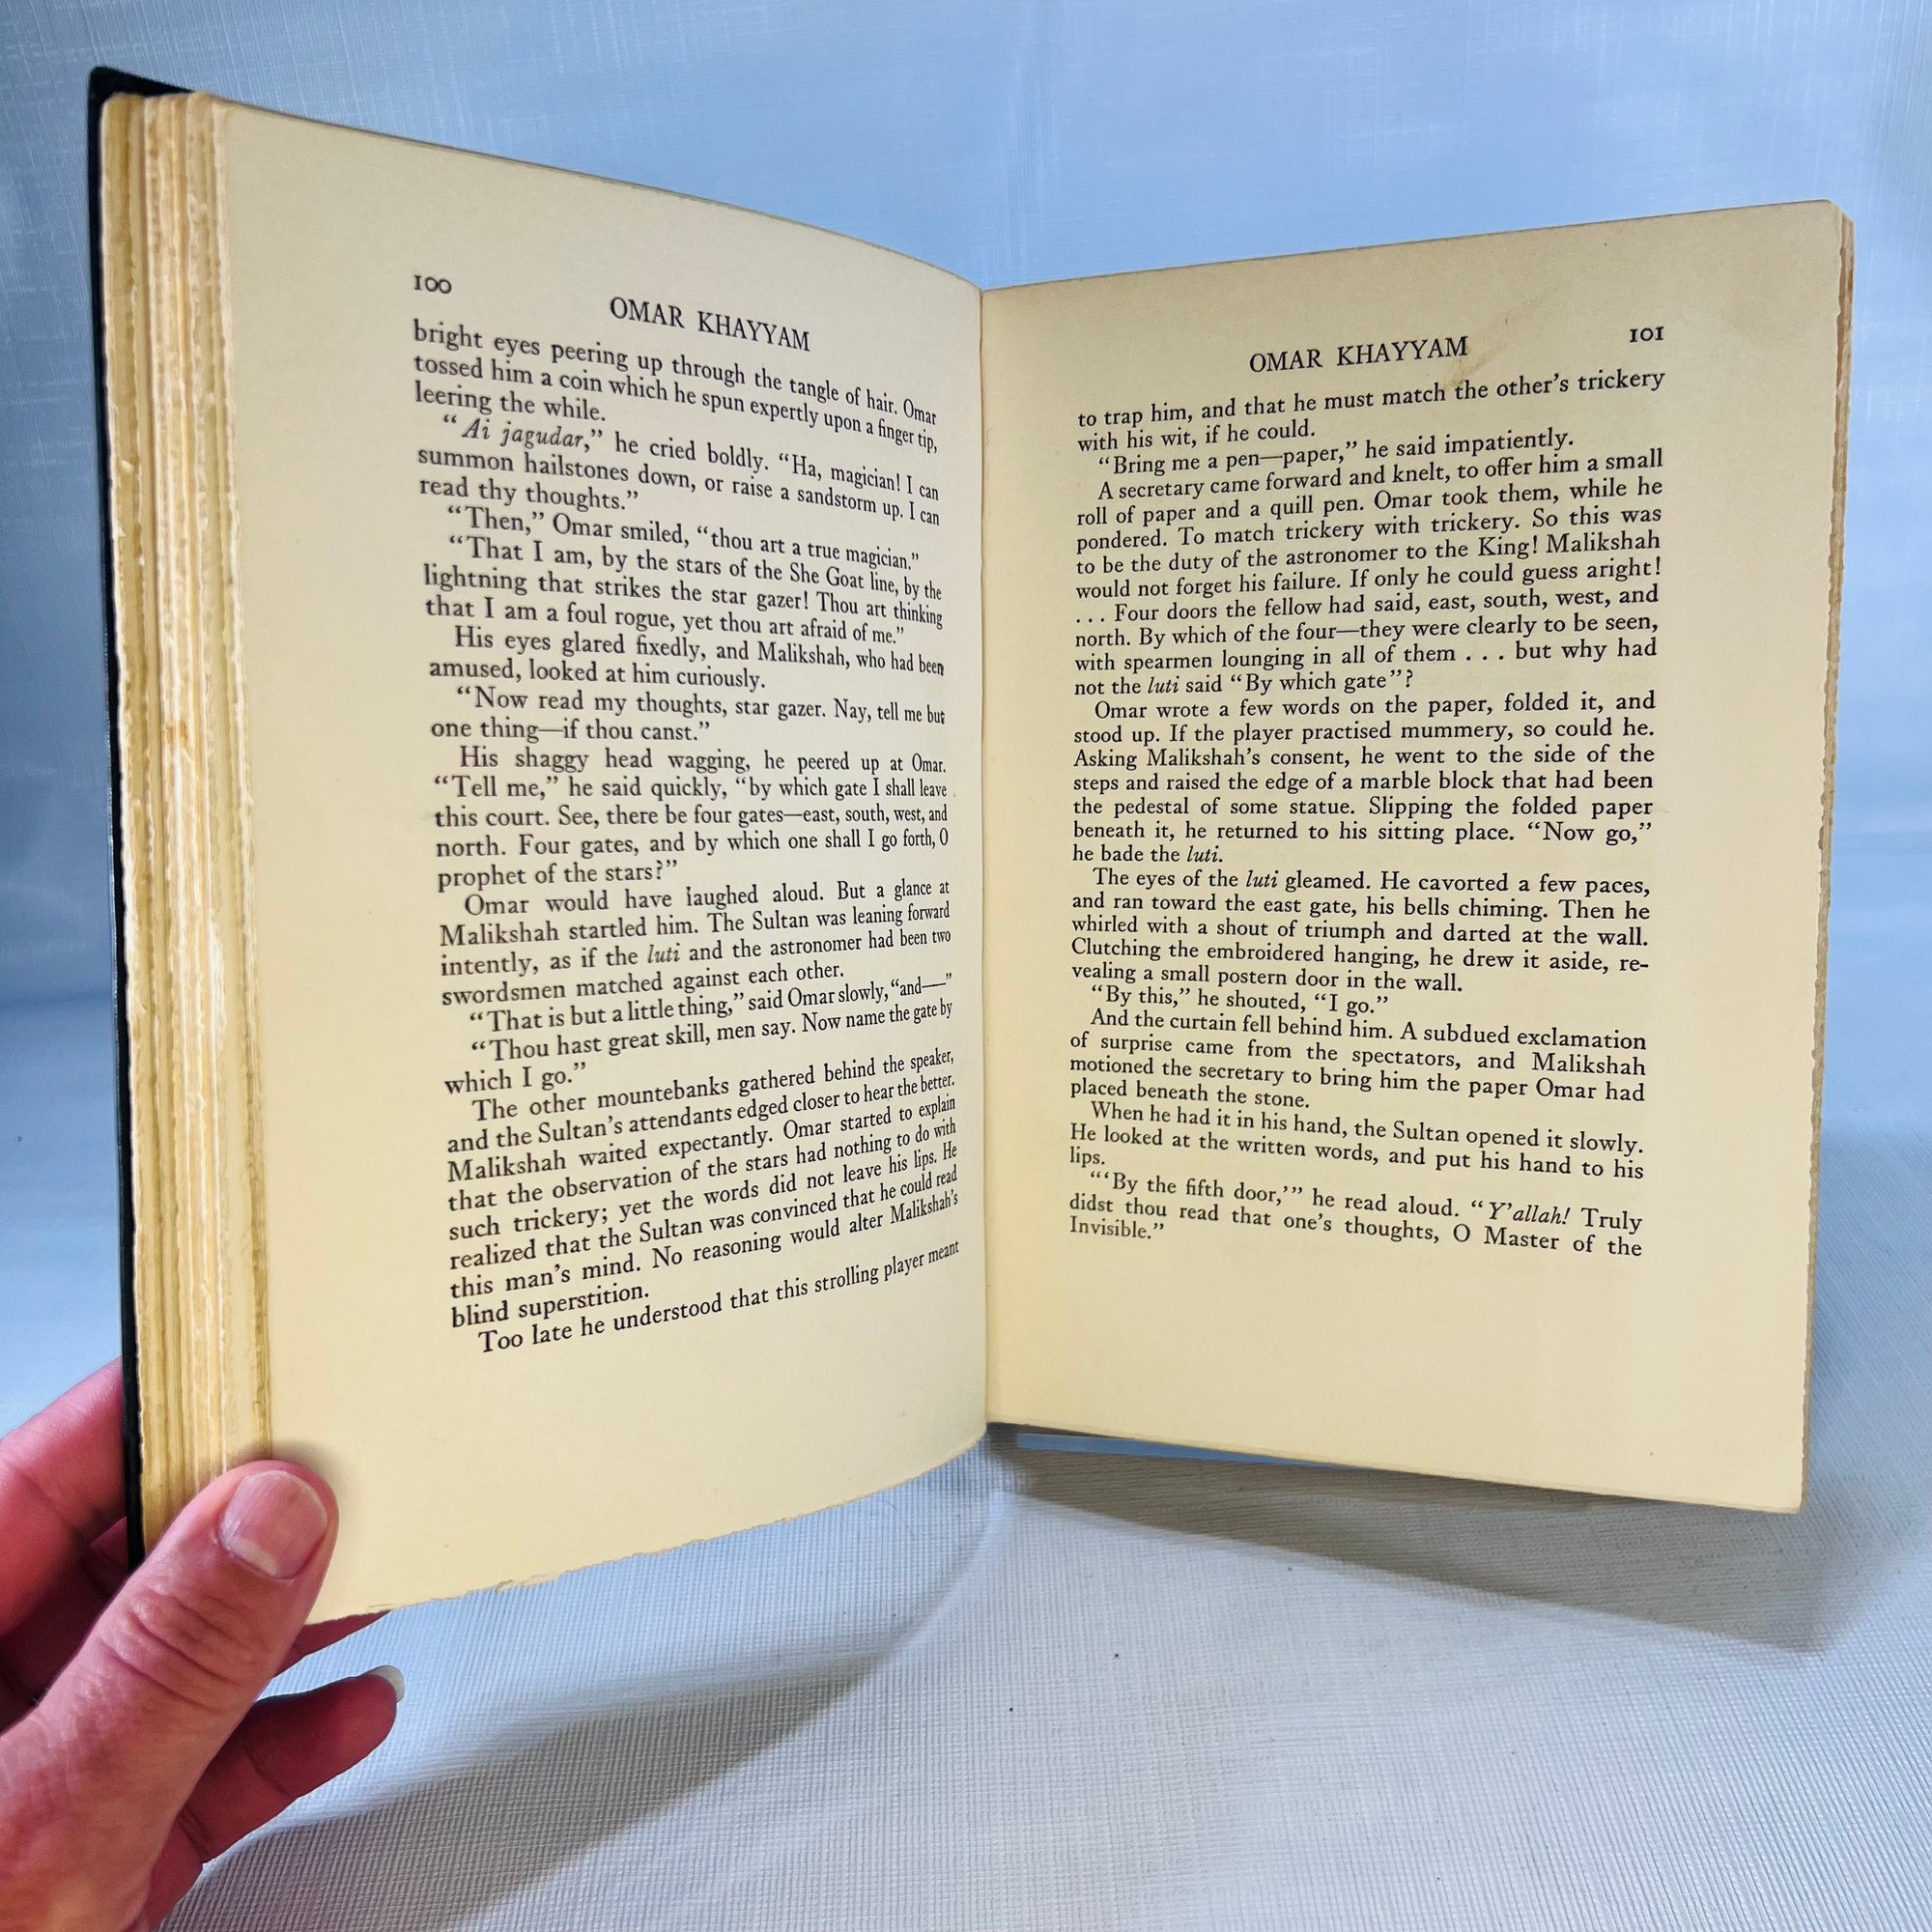 Omar Khayyam A Life by Harold Lamb 1934 Doubleday, Doran & Co, Inc